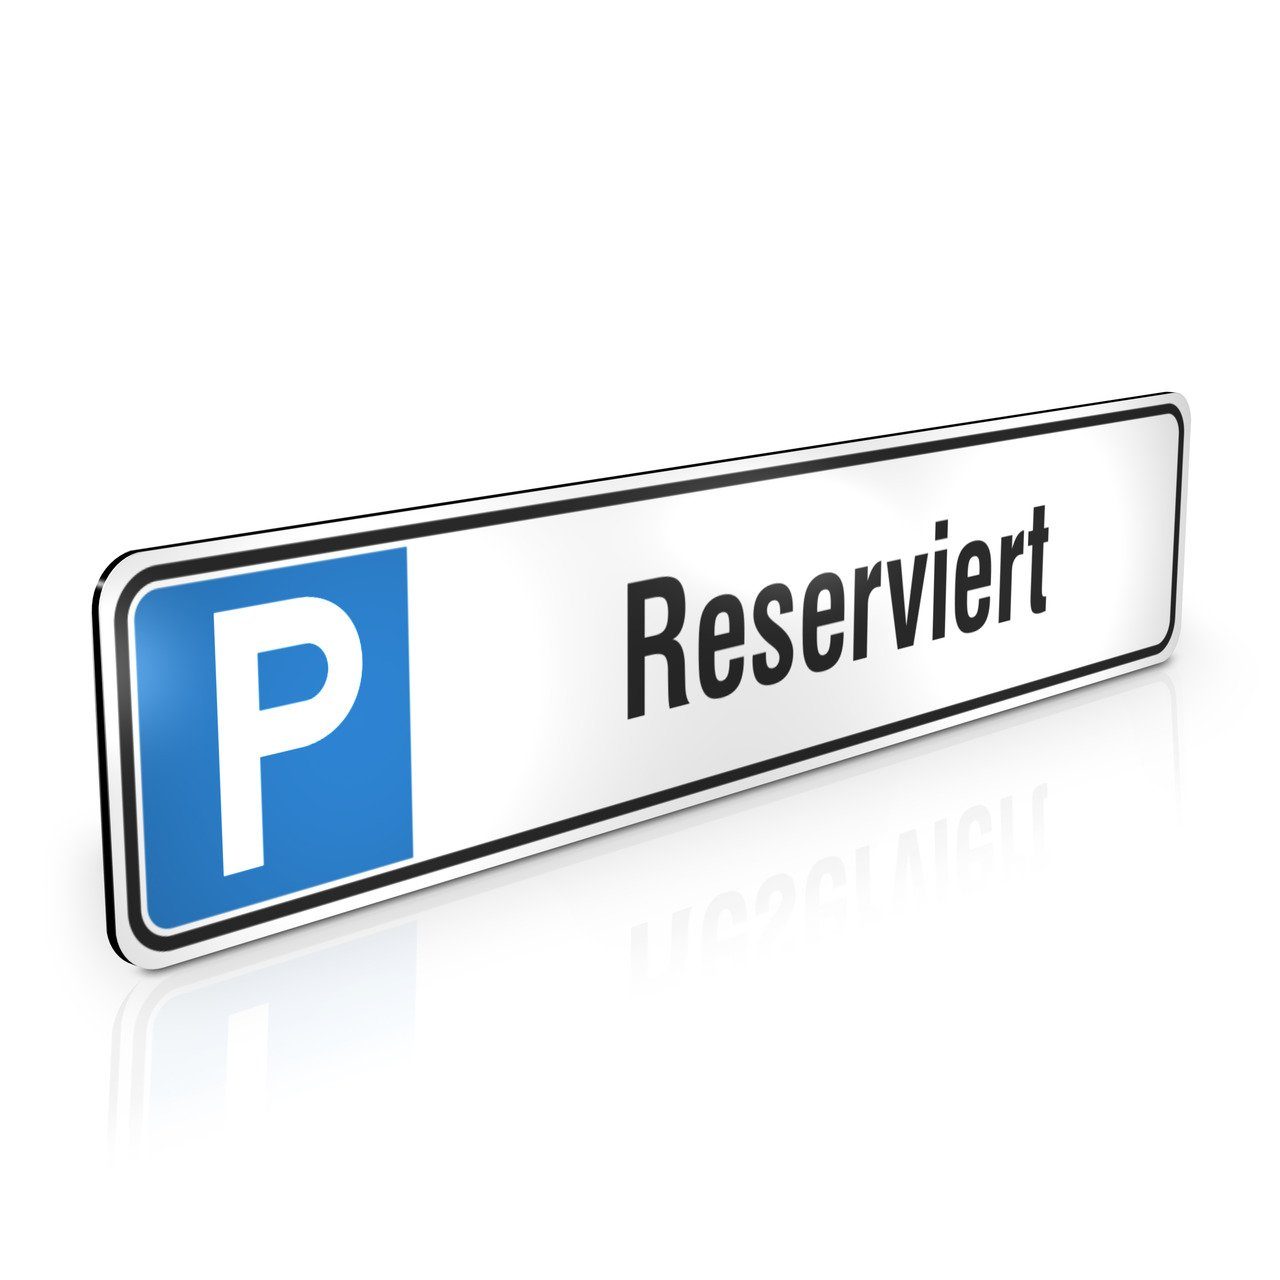 https://i.otto.de/i/otto/ea847609-1b89-4f29-b566-e48f7e0e6672/safetymarking-hinweisschild-parkplatzschild-symbol-p-text-reserviert.jpg?$formatz$